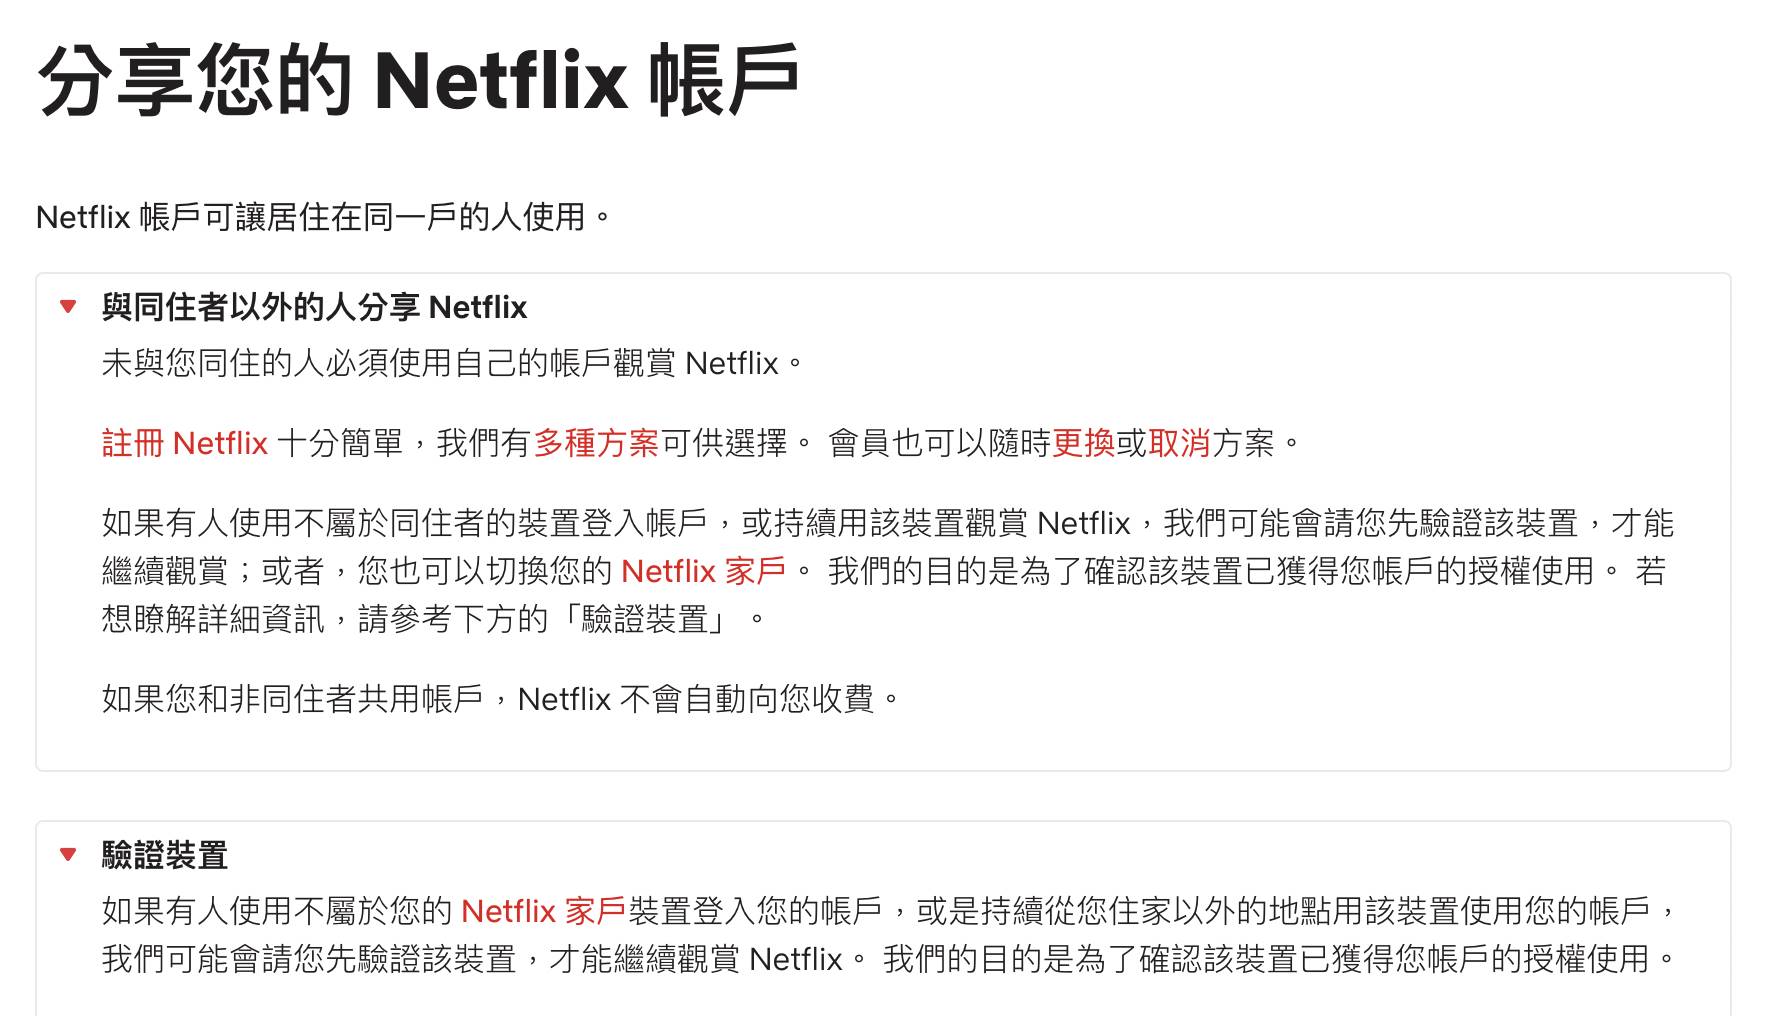 Netflix先前就預告將從今（2022）年第一季起將嚴格掃蕩寄生帳號，Netflix也於官網說明防範政策，Netflix將會用IP位址、裝置識別碼等資訊來判斷是否為同住者，非同住者使用帳號會需要先驗證該裝置才能繼續觀賞。